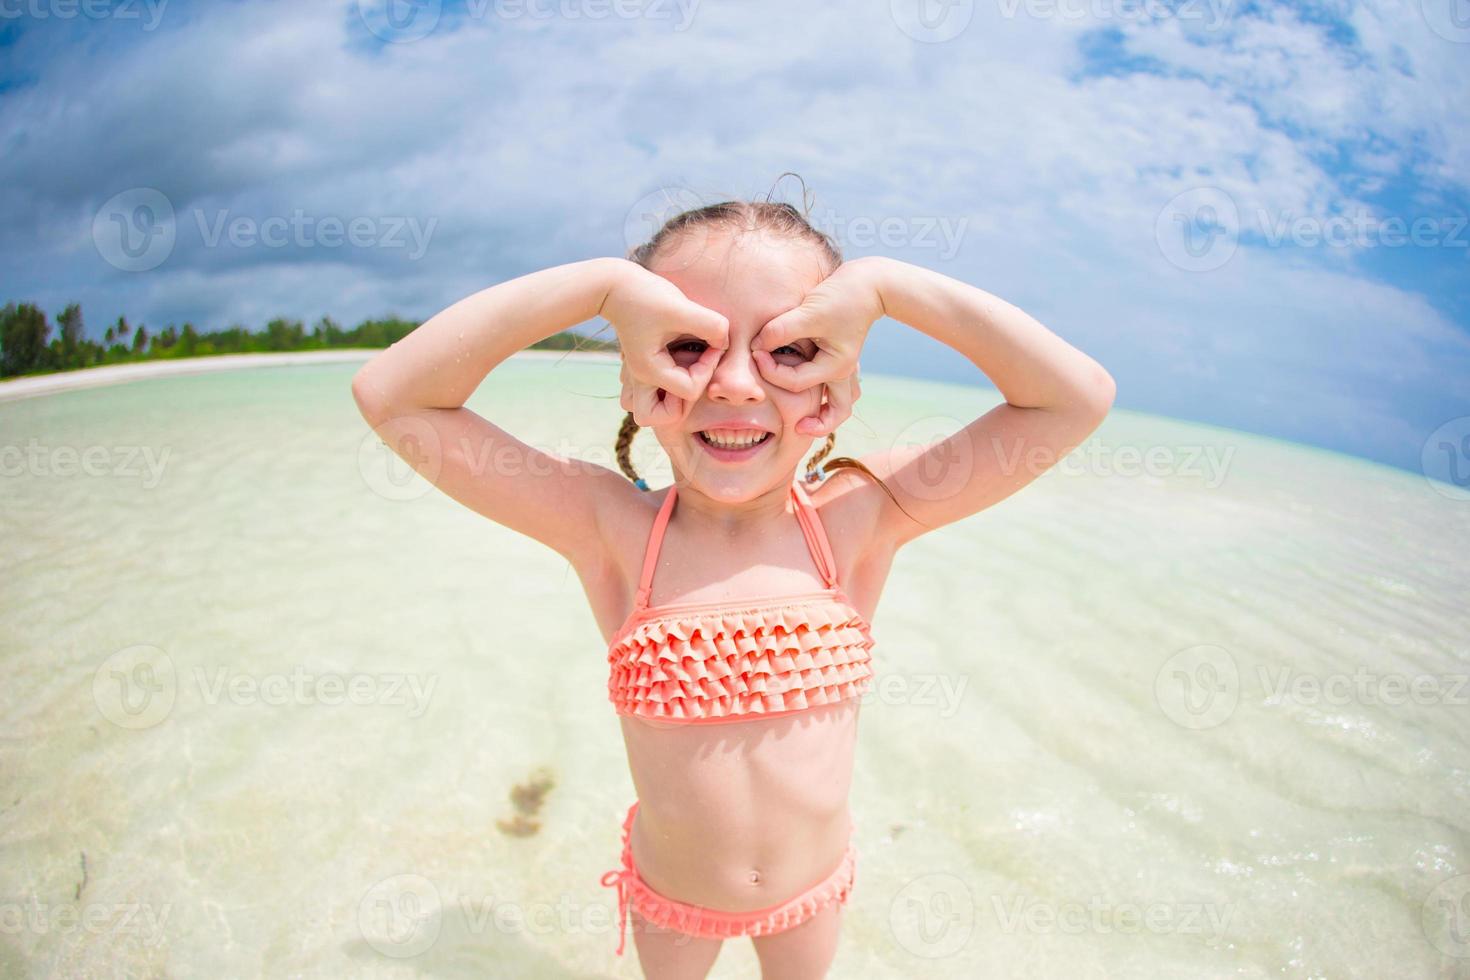 Adorable little girl having fun like as a superhero at beach during summer vacation photo